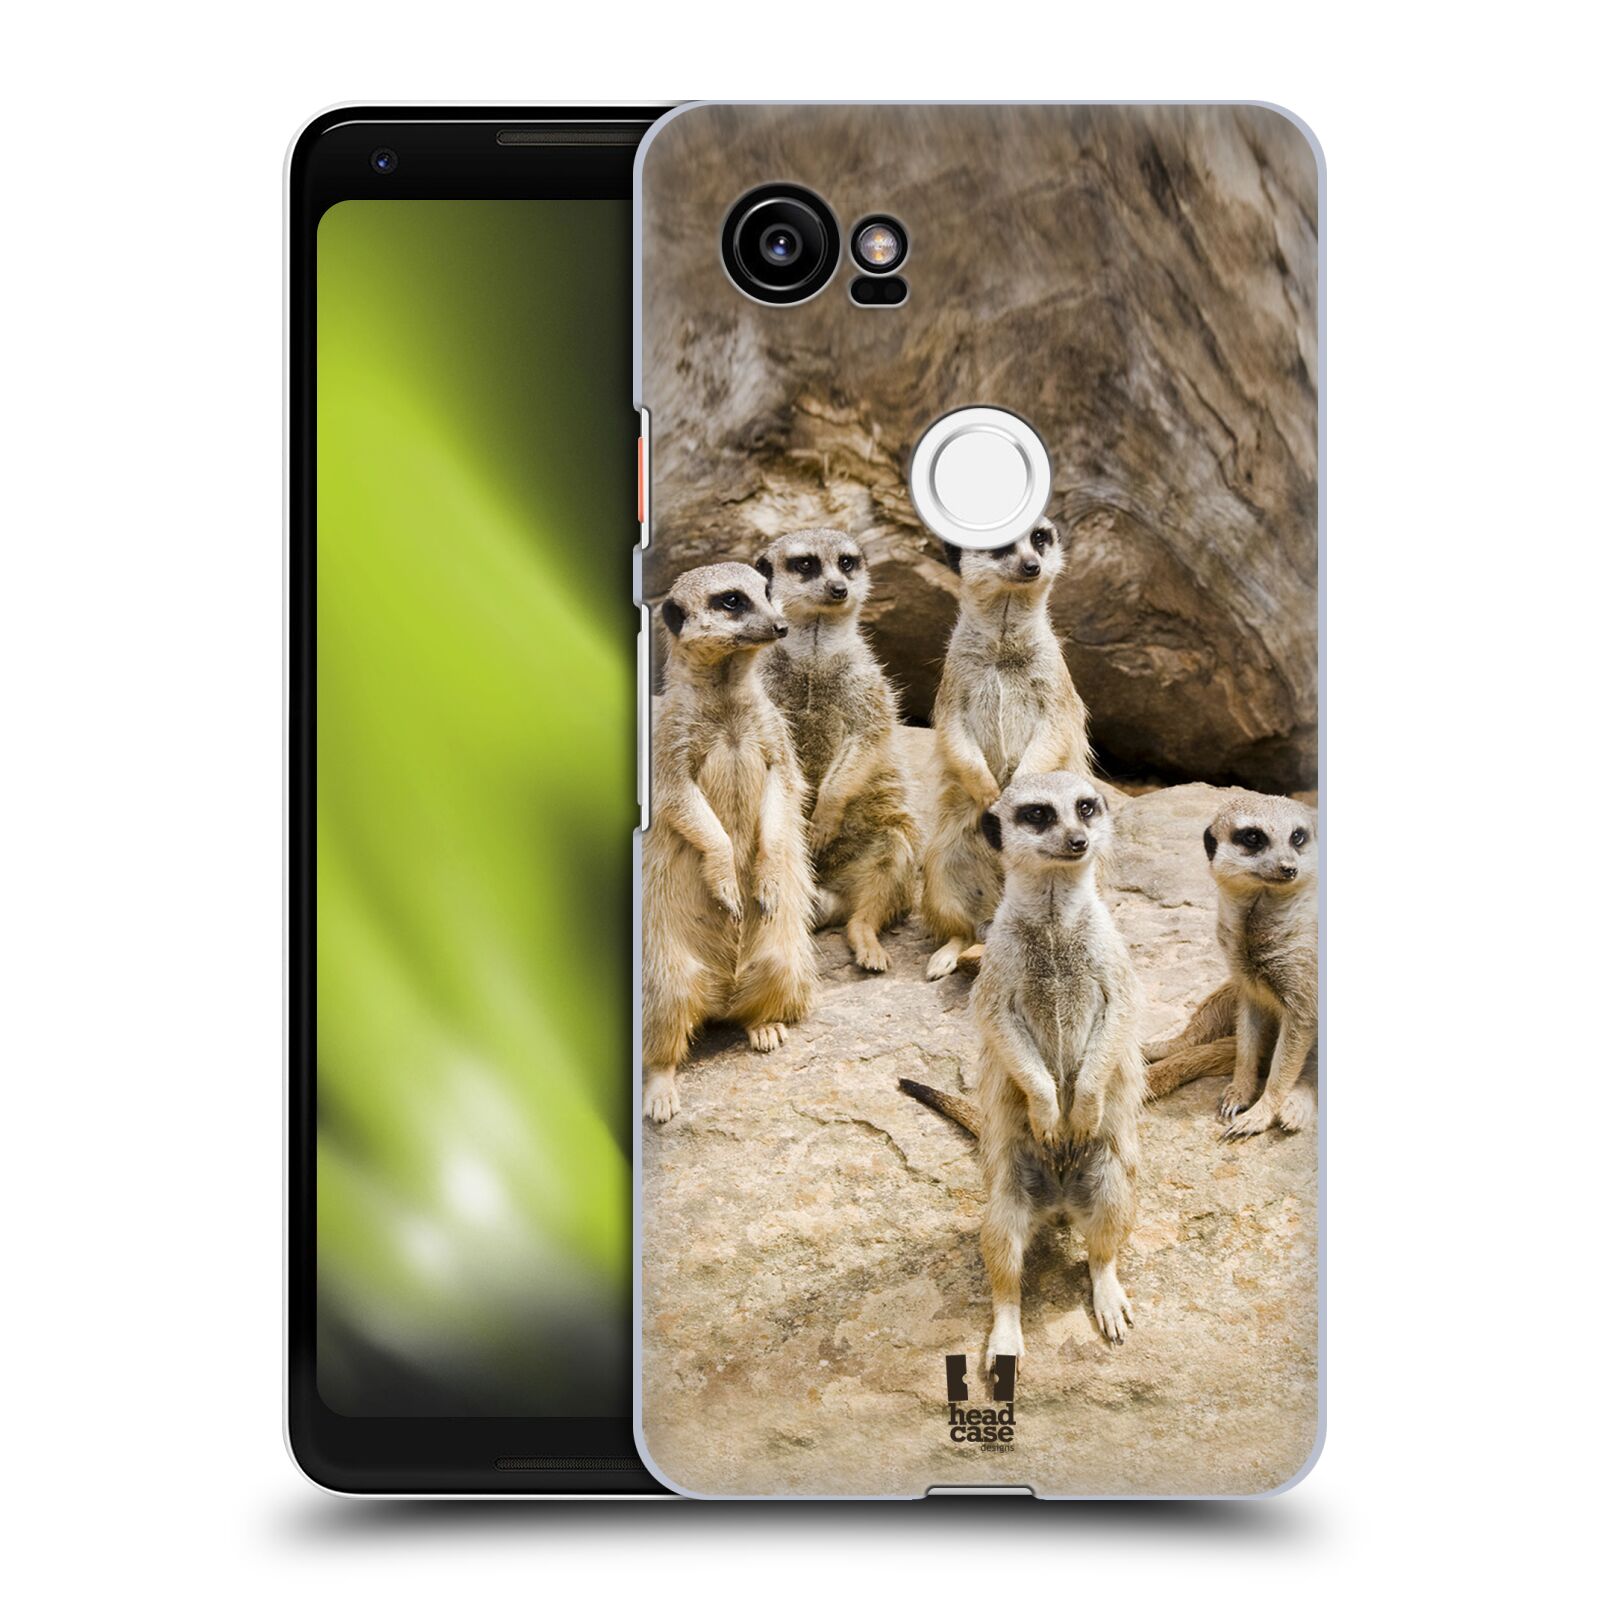 HEAD CASE plastový obal na mobil Google Pixel 2 XL vzor Divočina, Divoký život a zvířata foto SURIKATA